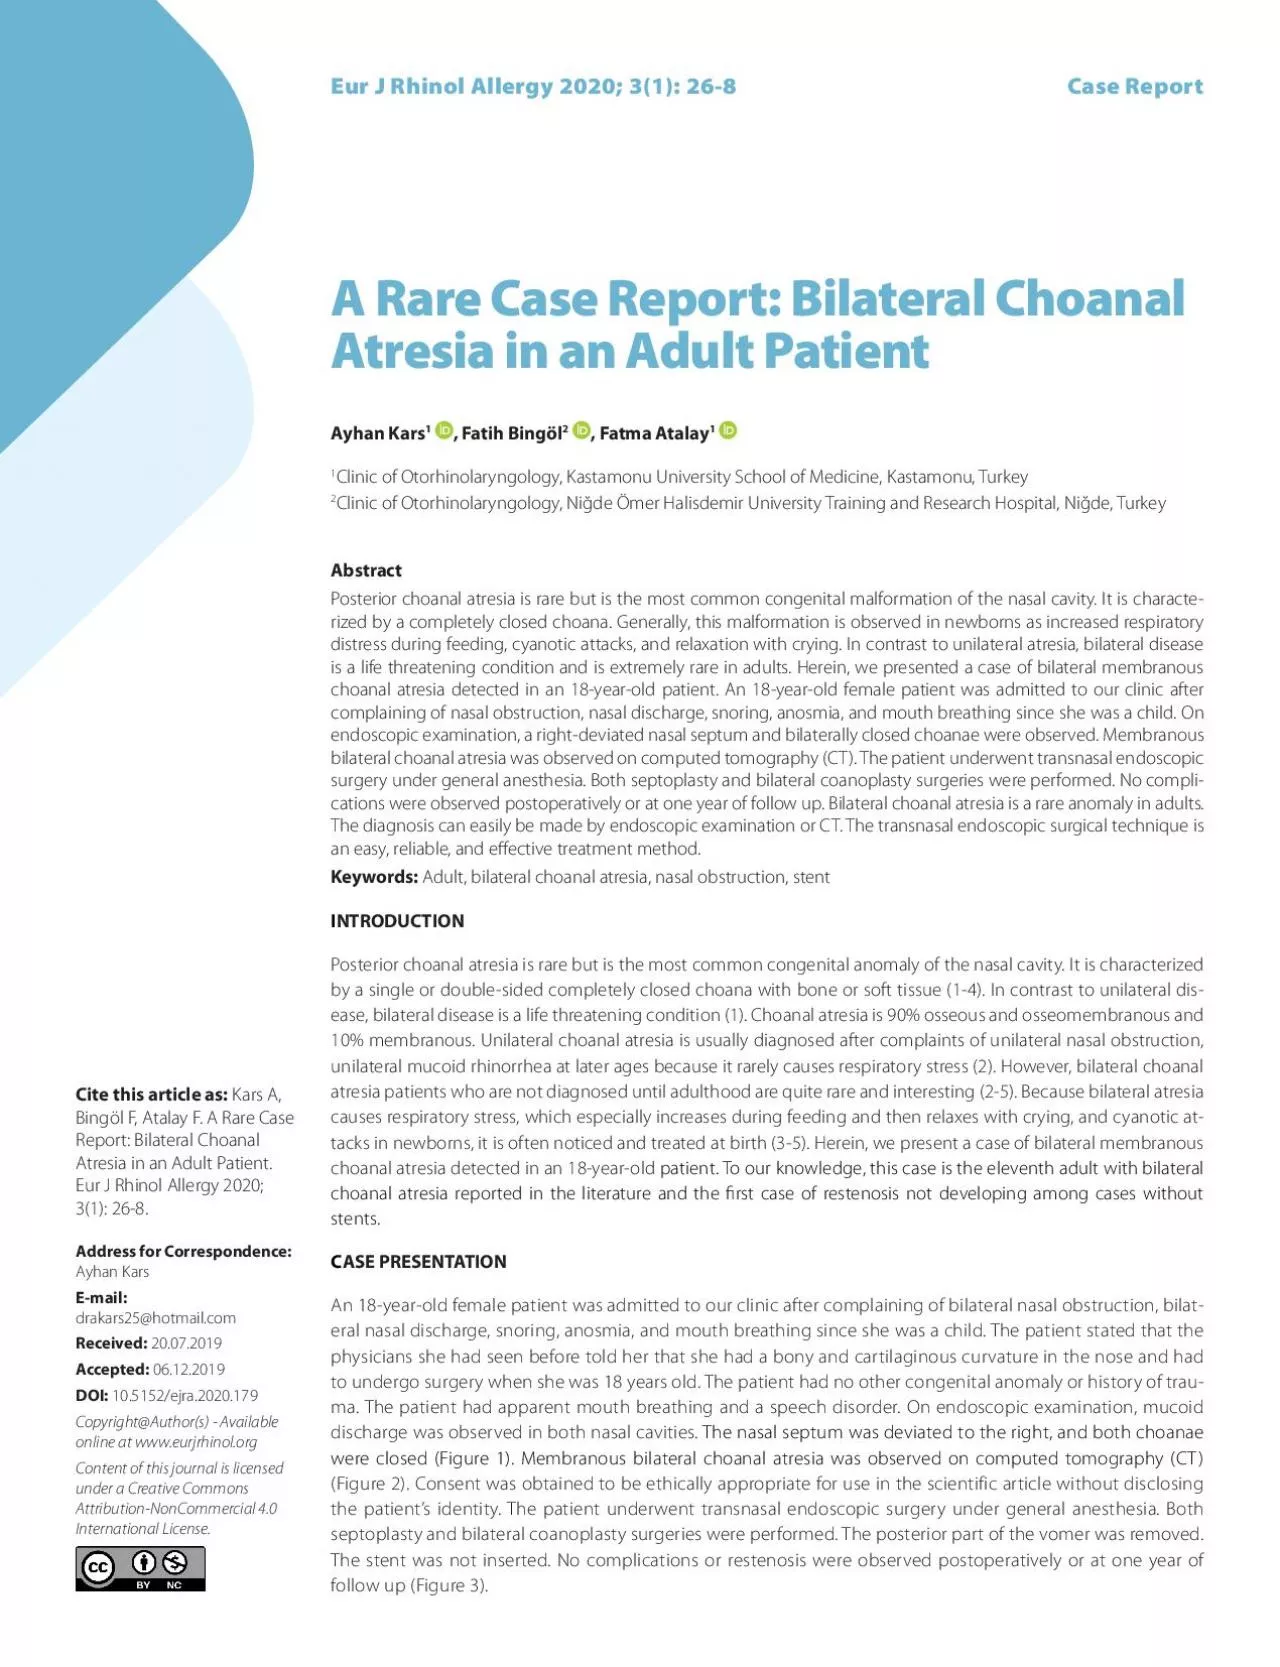 A Rare Case Report Bilateral Choanal